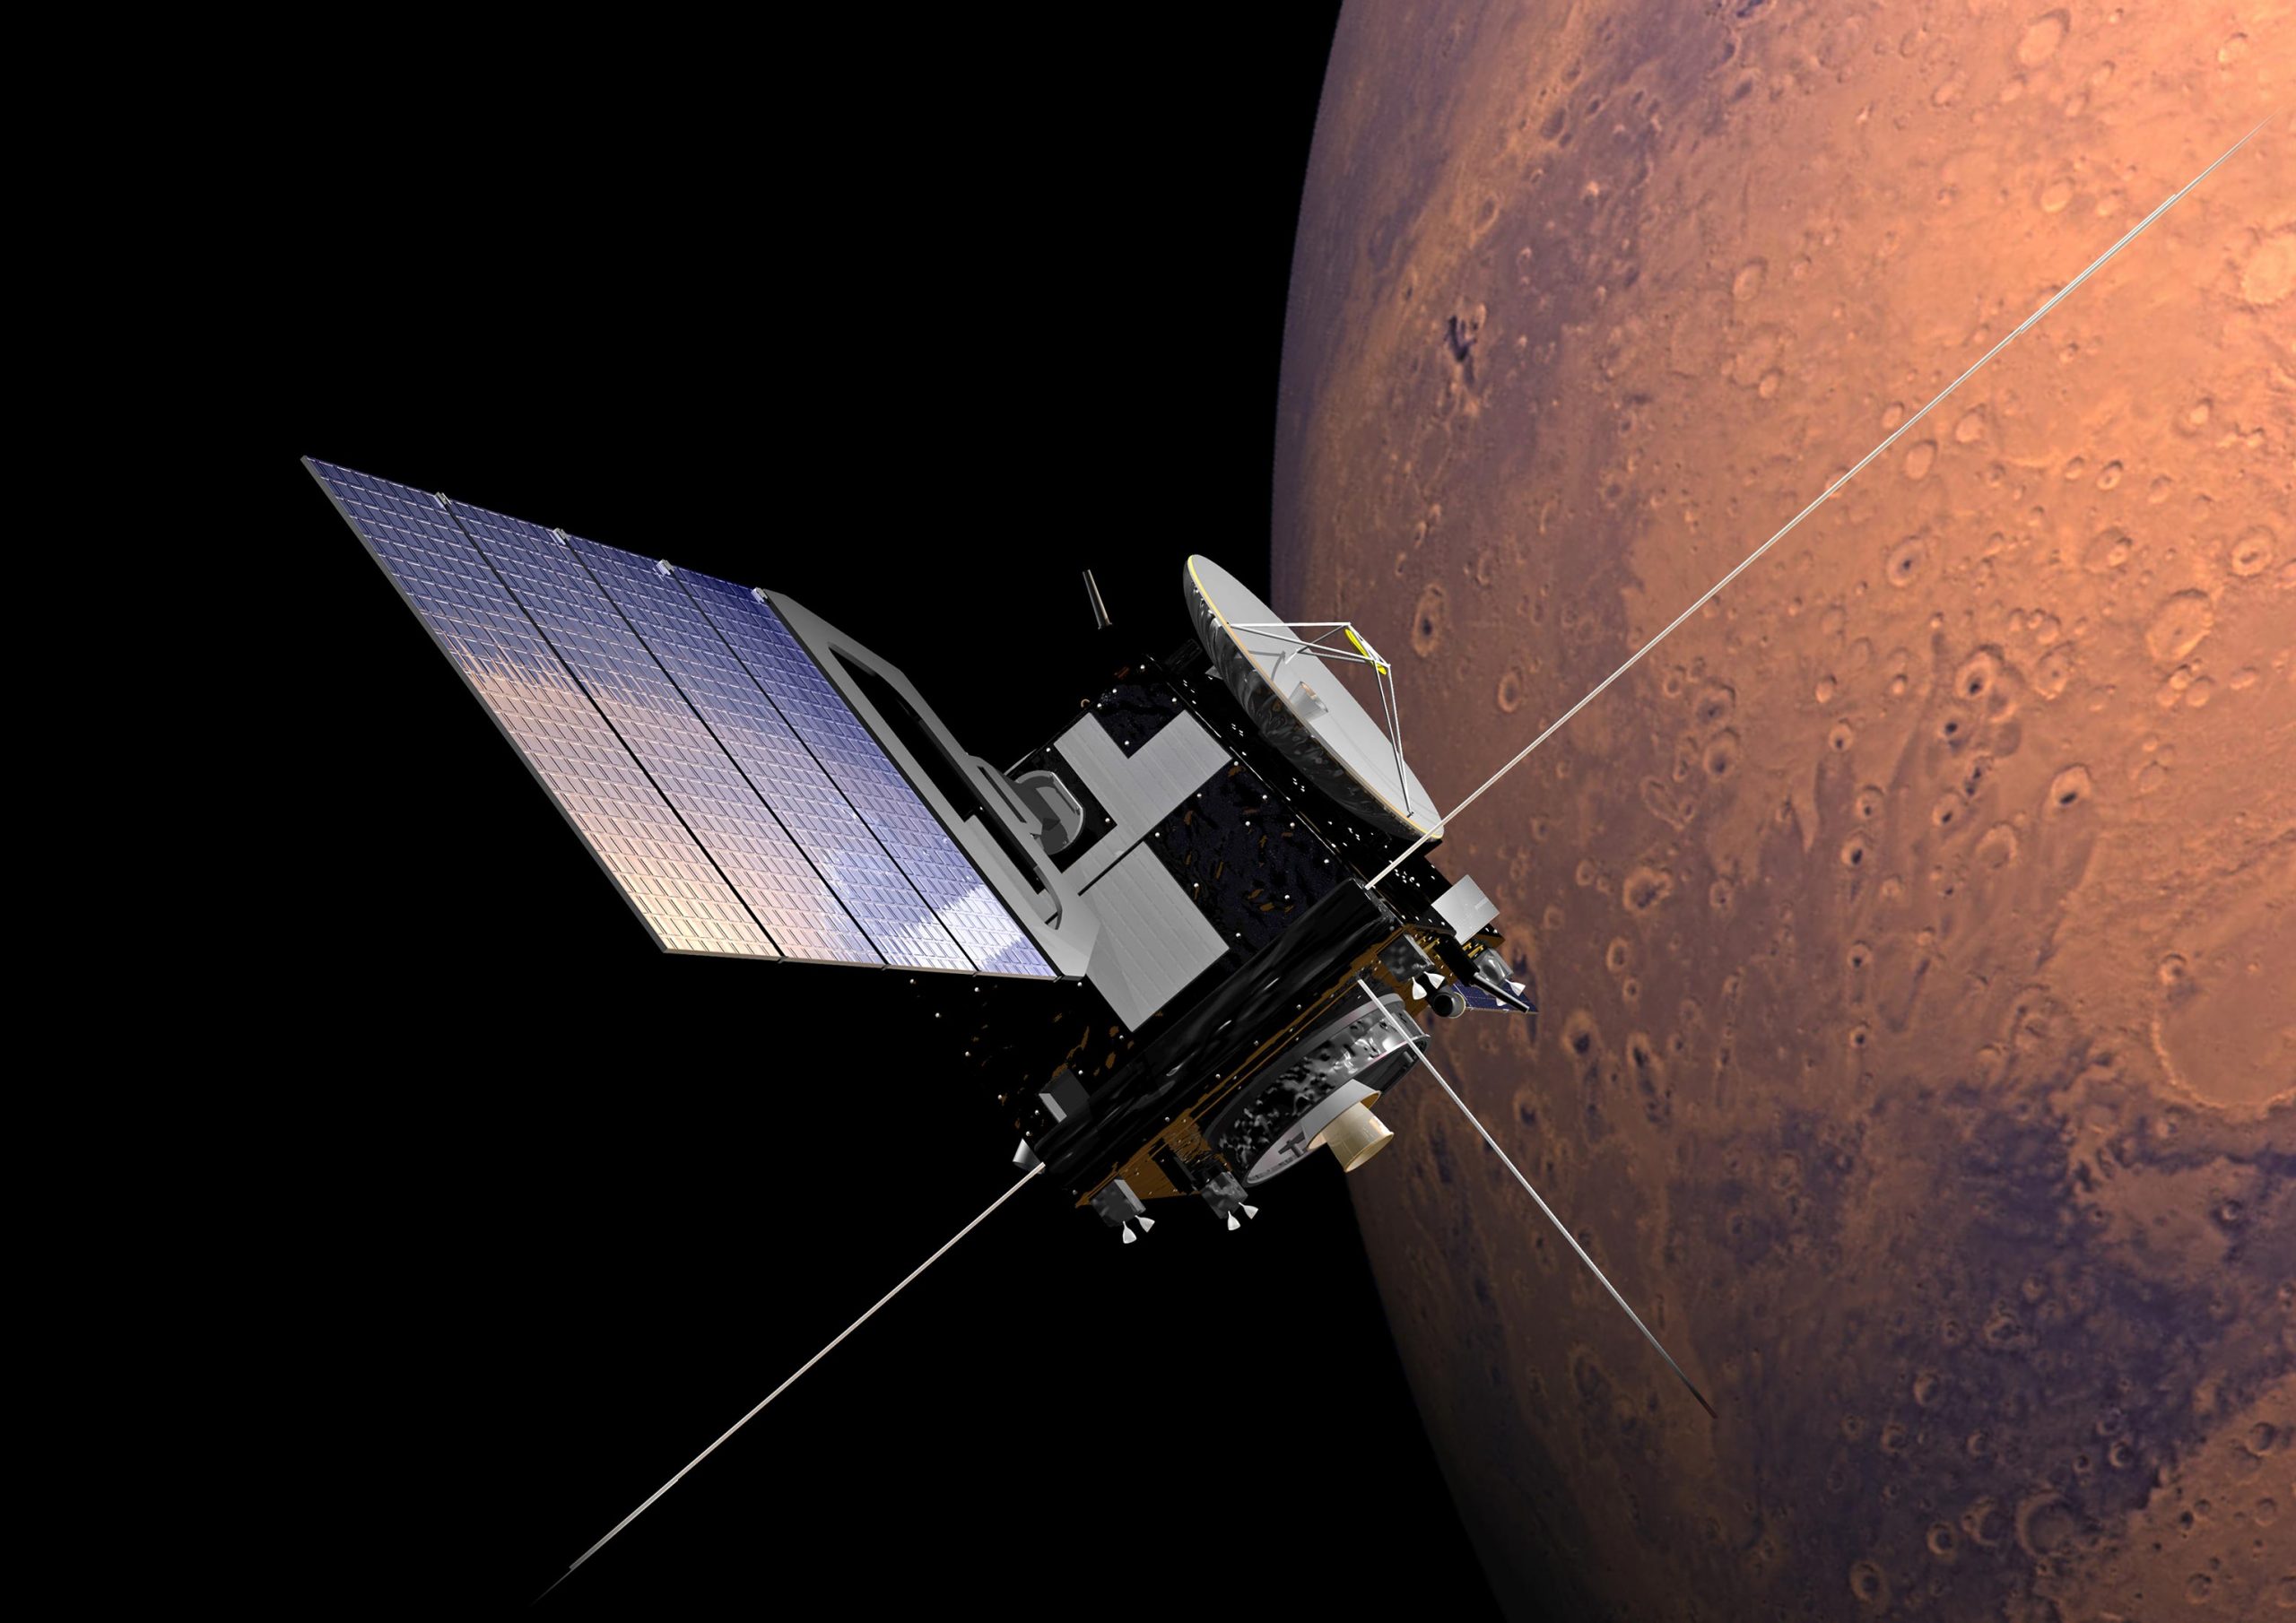 File:Mars Express (Artist's impression) ESA197108.jpg - Wikimedia Commons